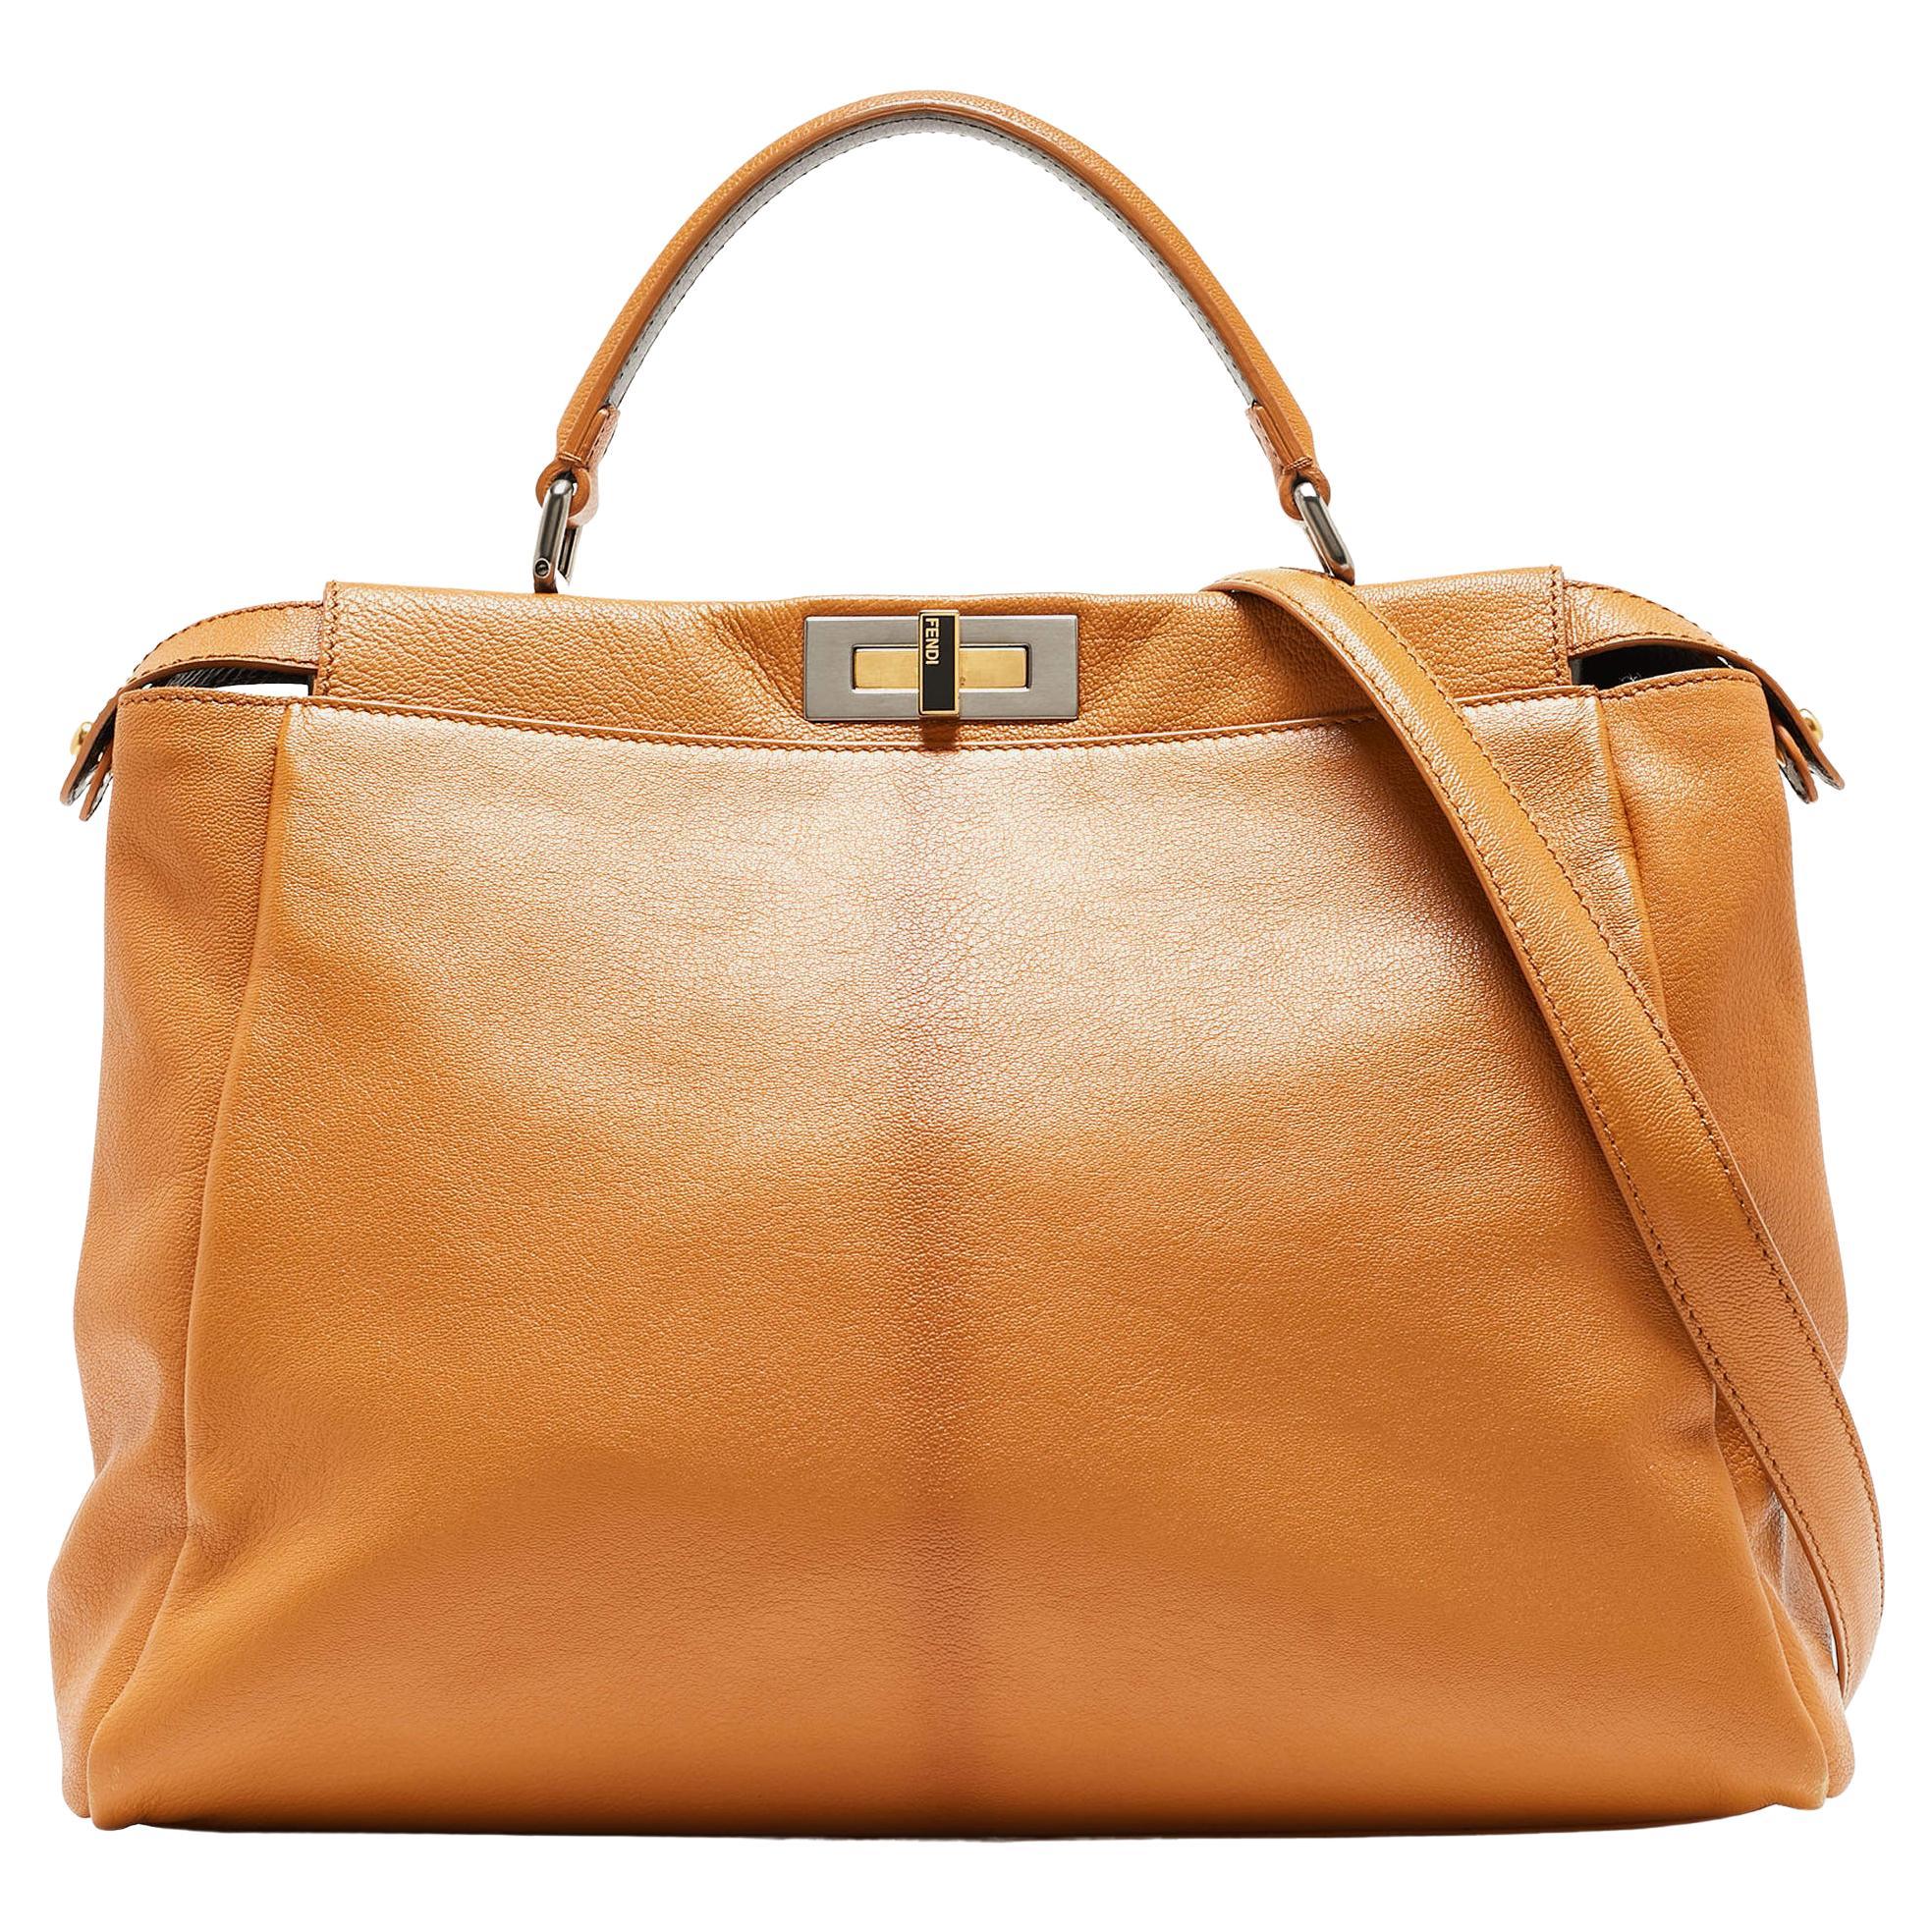 Fendi Tan Leather Large Peekaboo Top Handle Bag For Sale